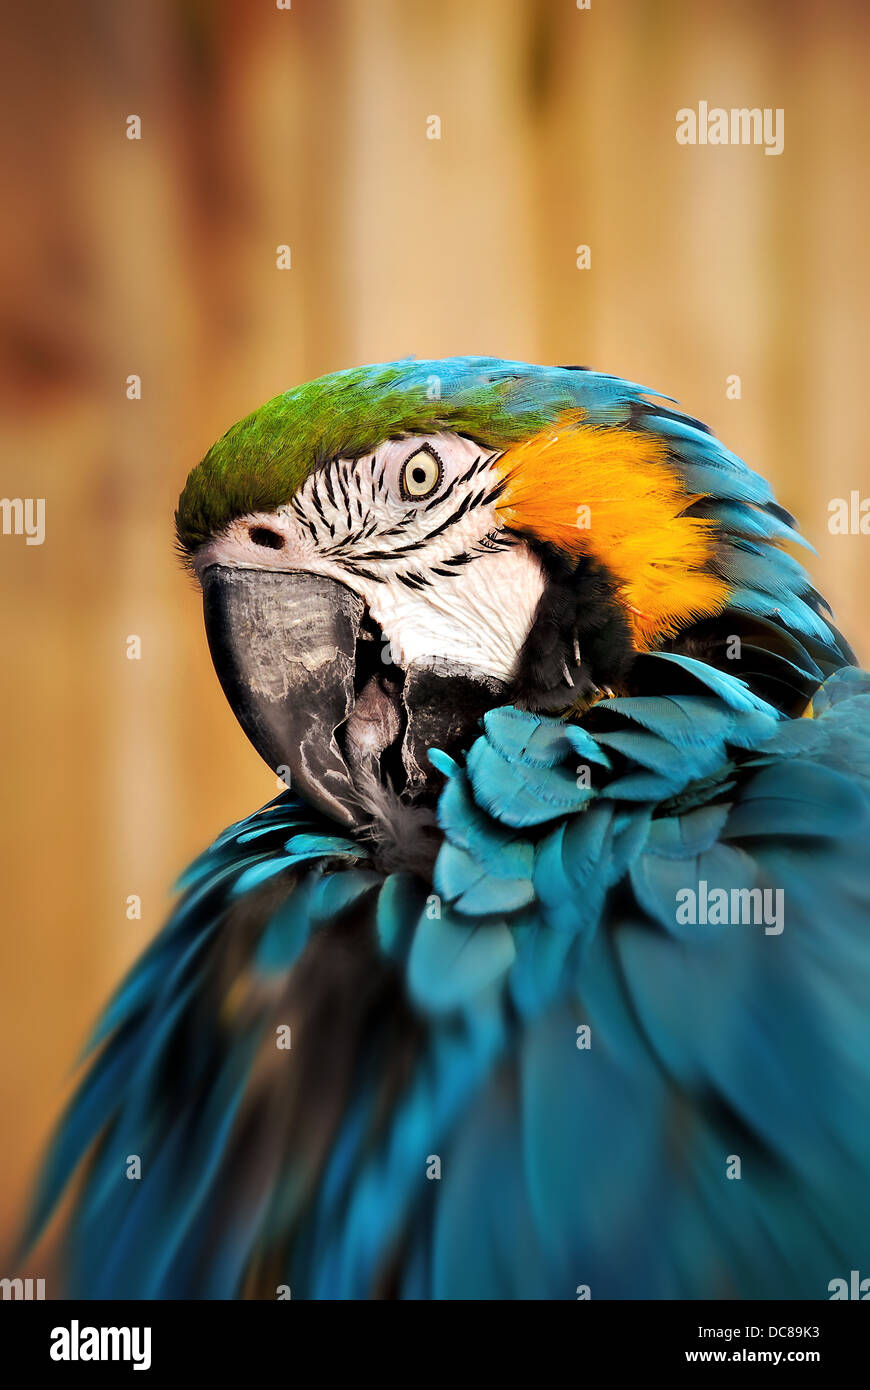 Blue macaw portrait zoo wild endangered species Stock Photo